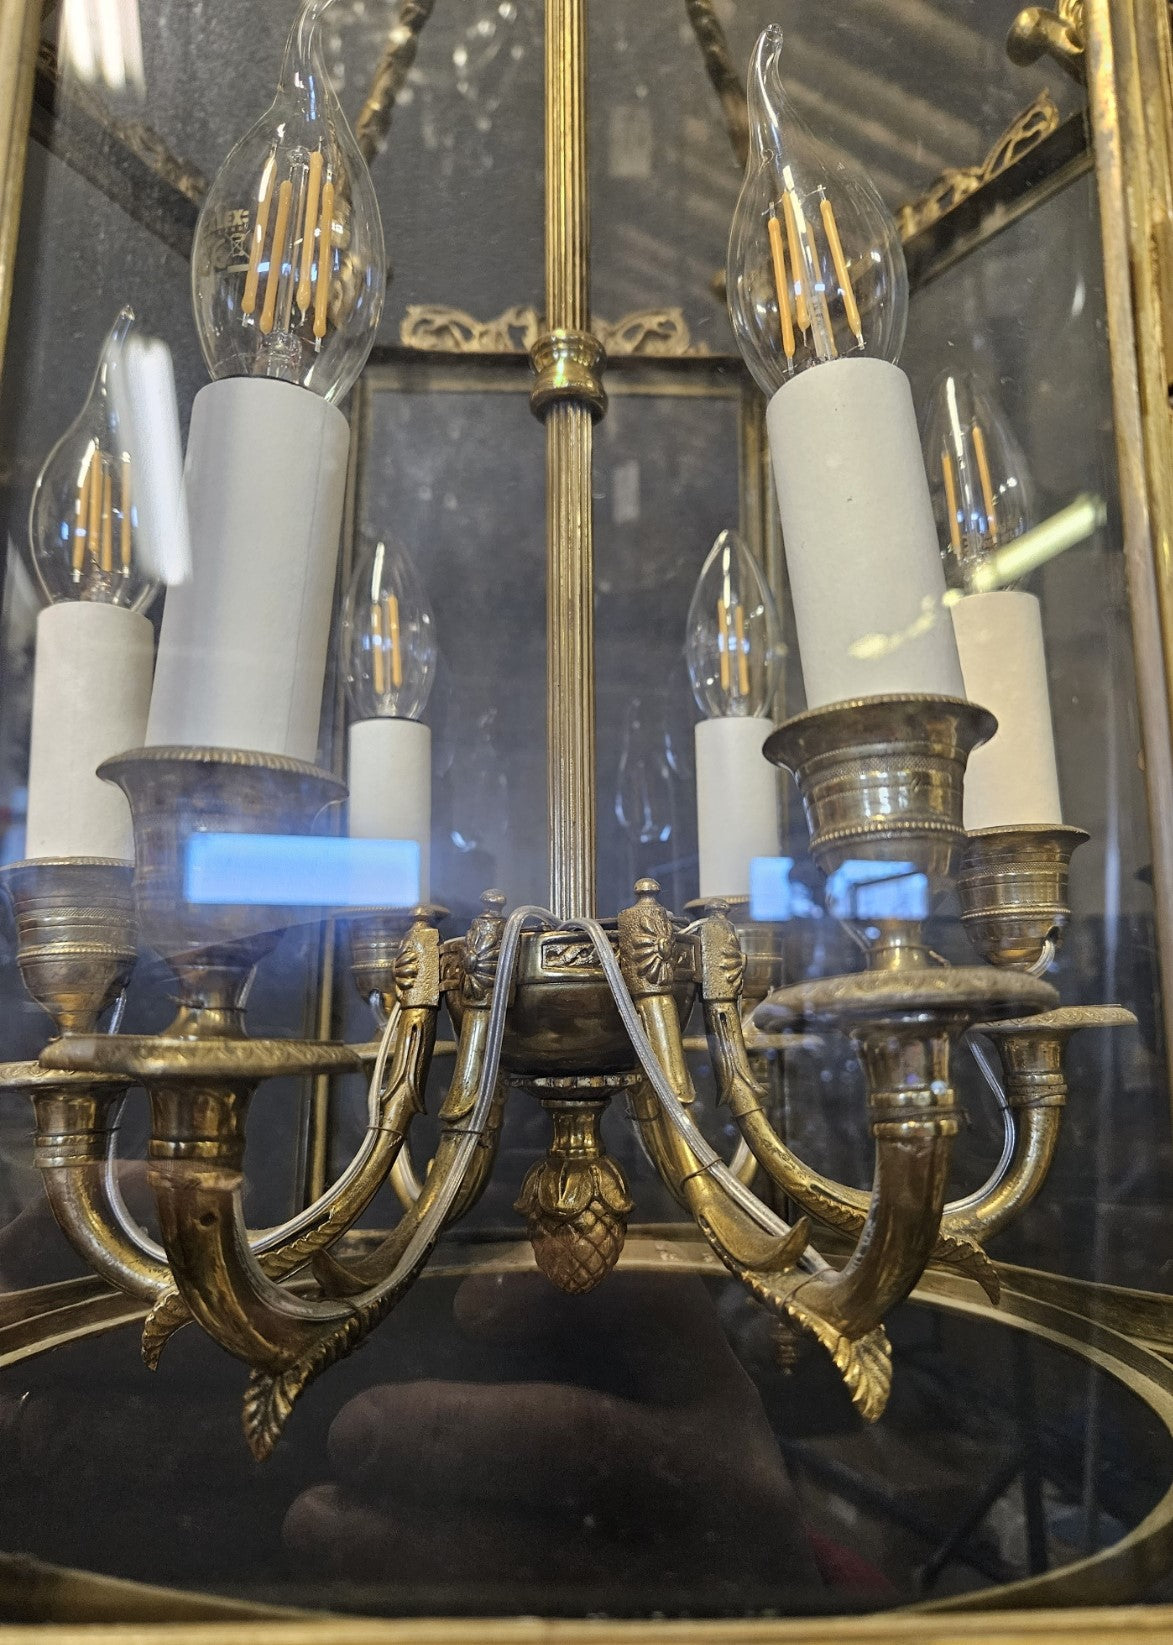 view of inside chandelier